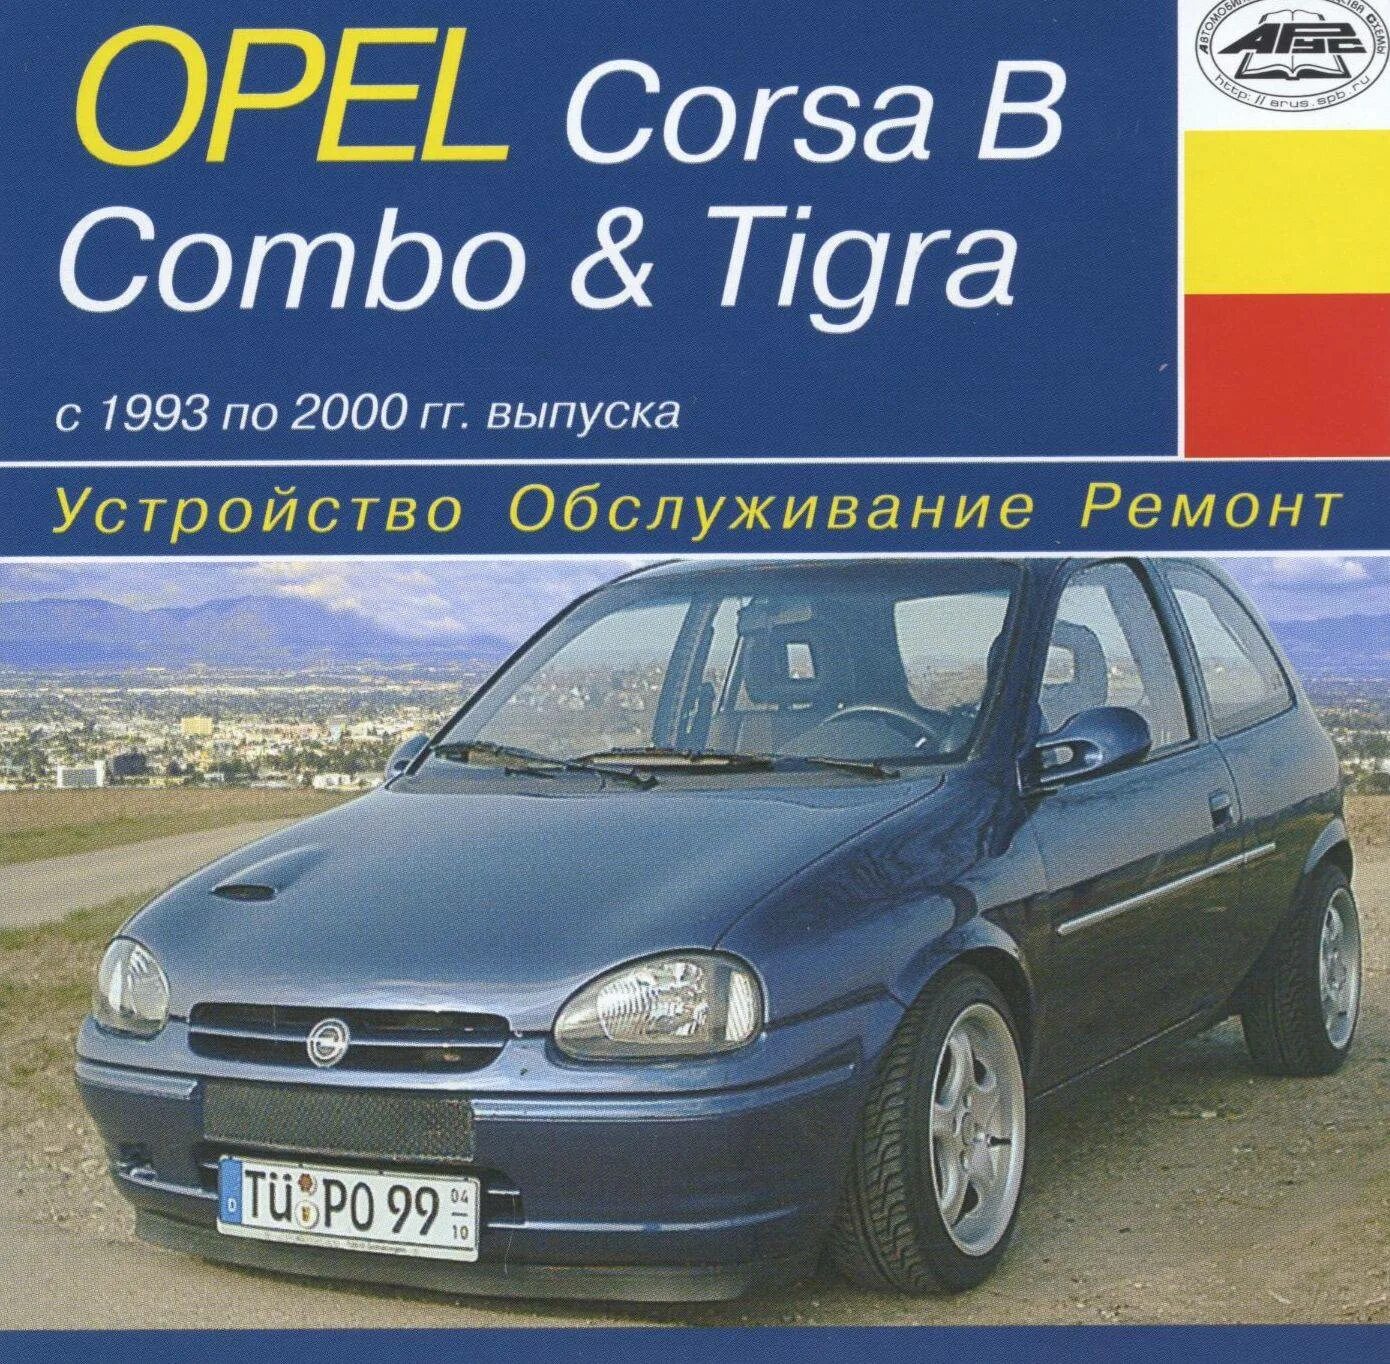 Opel эксплуатация. Руководство по ремонту Опель Корса. Опель Корса б комбо. Опель Корса 1993 года. Эксплуатация и ремонт Опель комбо Корса.